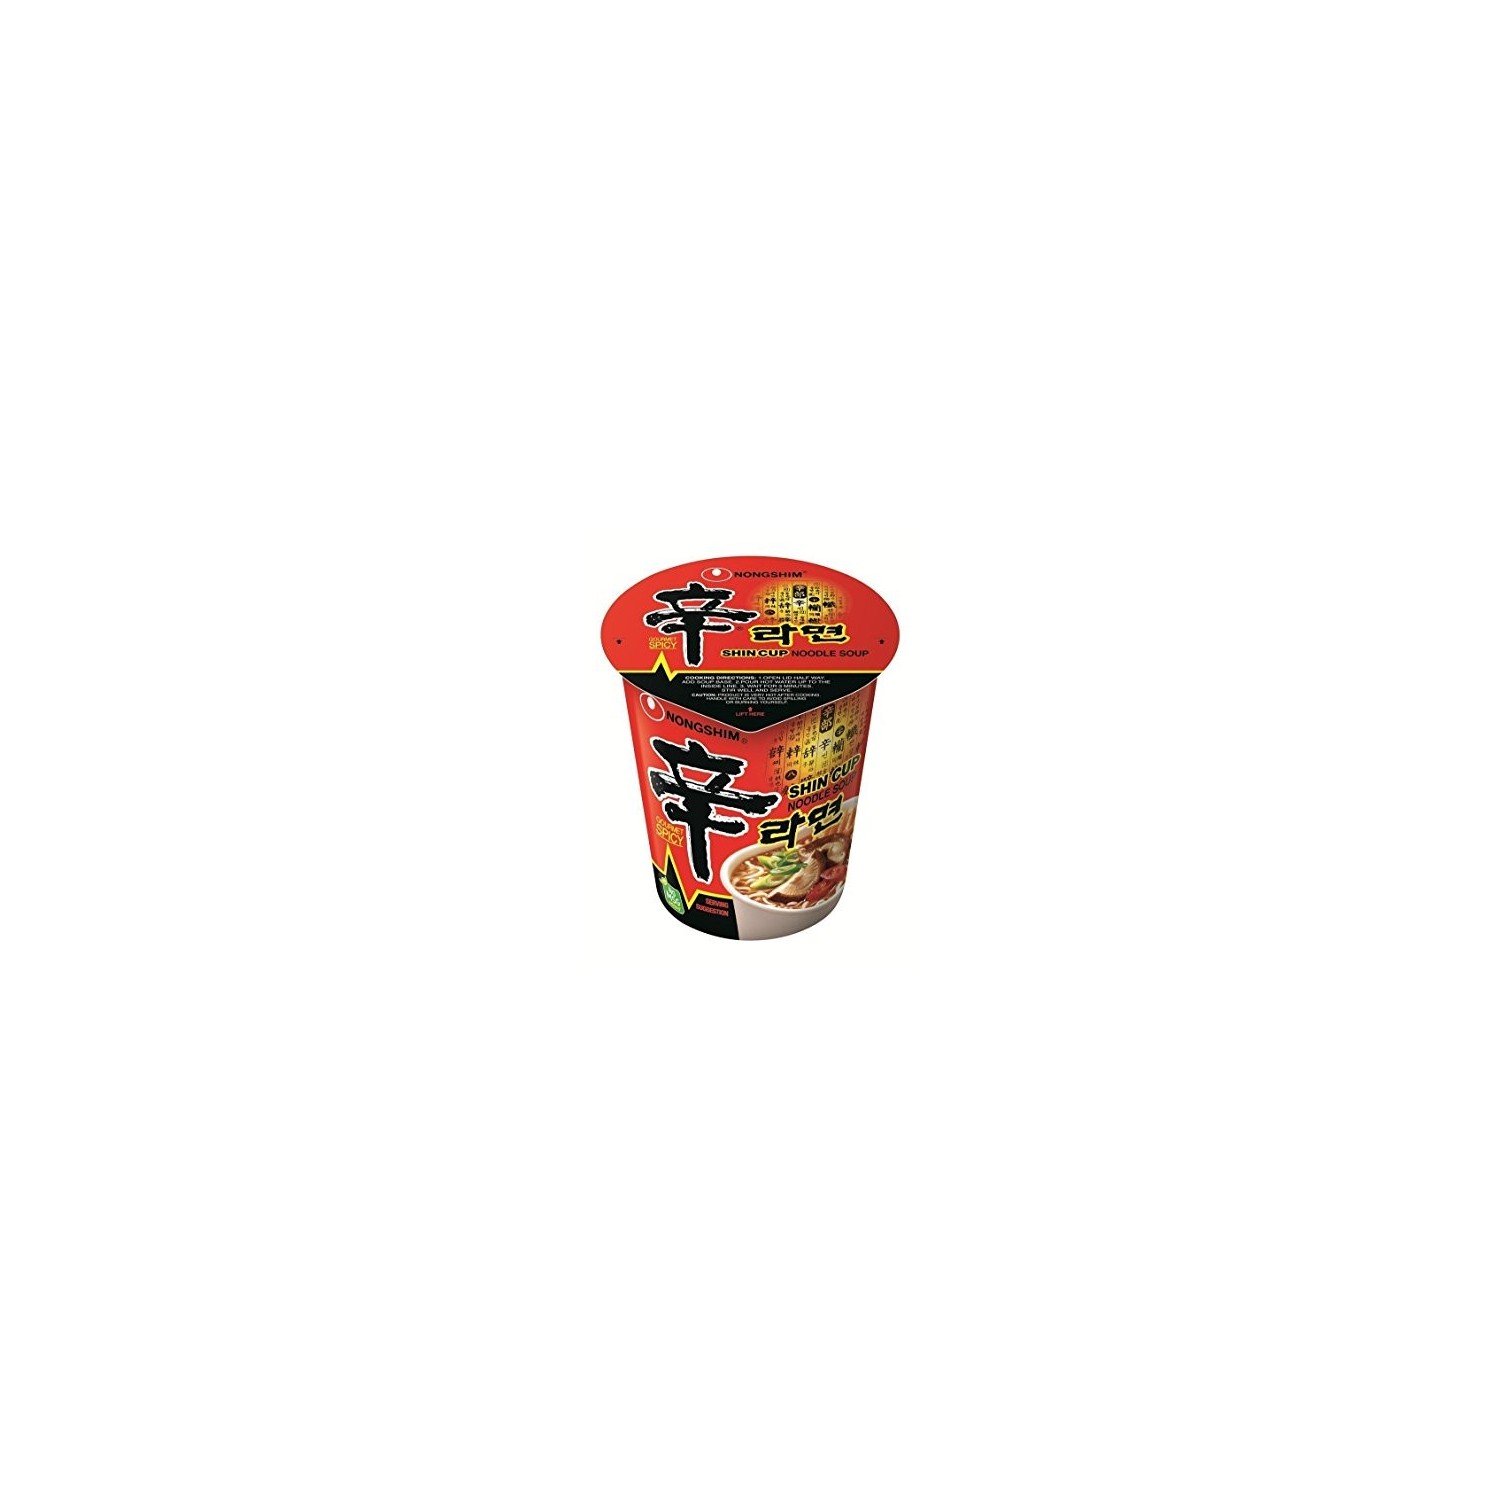 Nongshim - 68g - Spicy Shin Cup